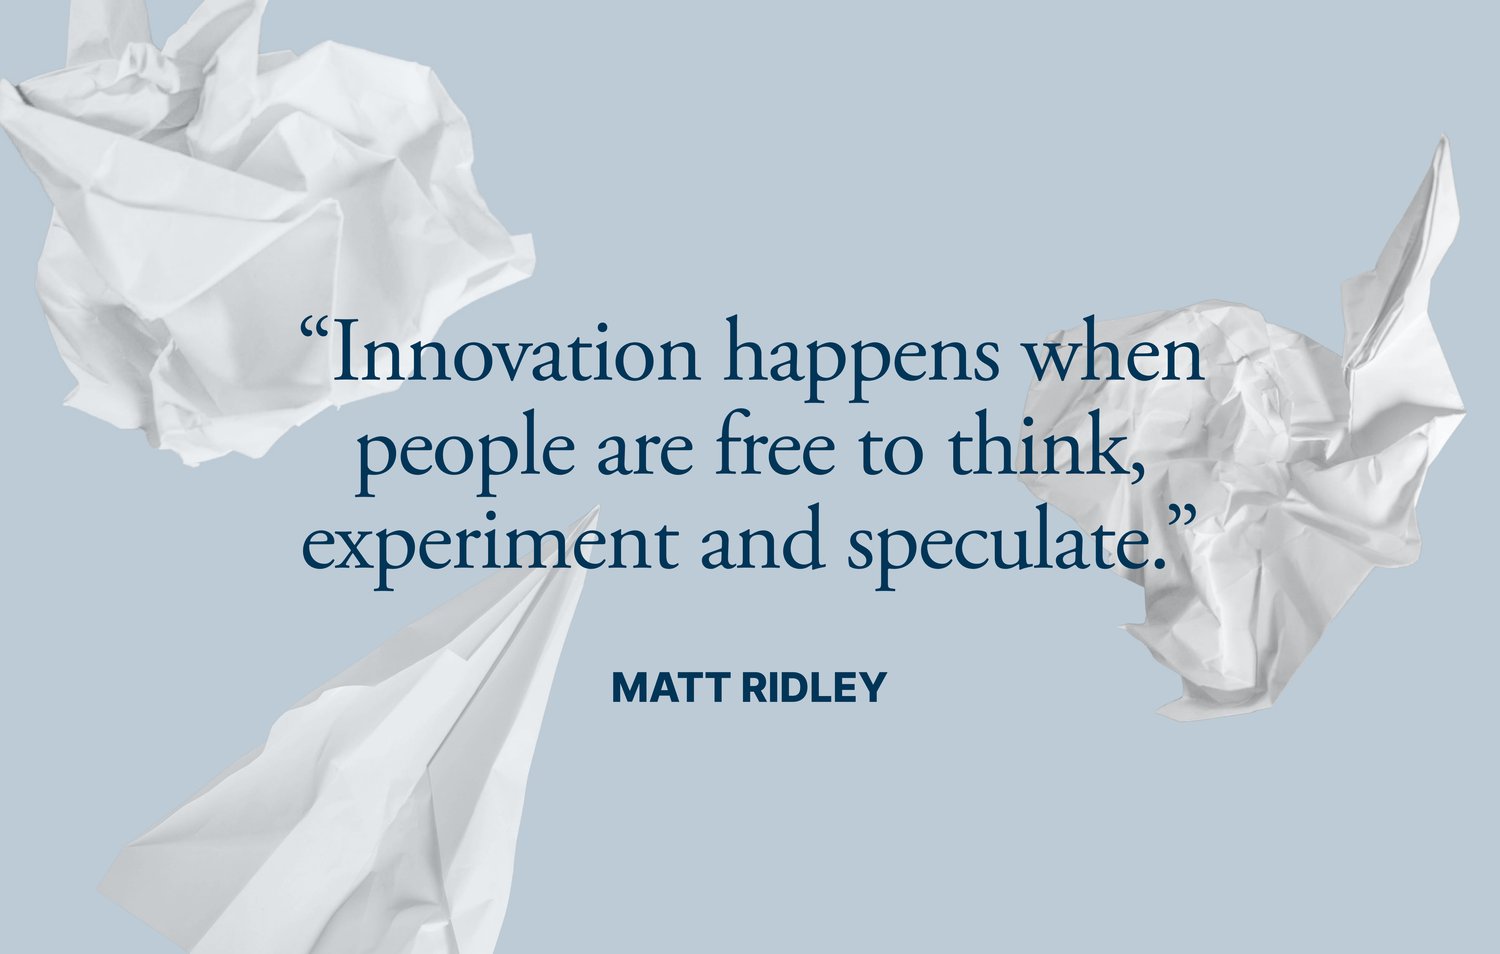 Quote from Matt Ridley